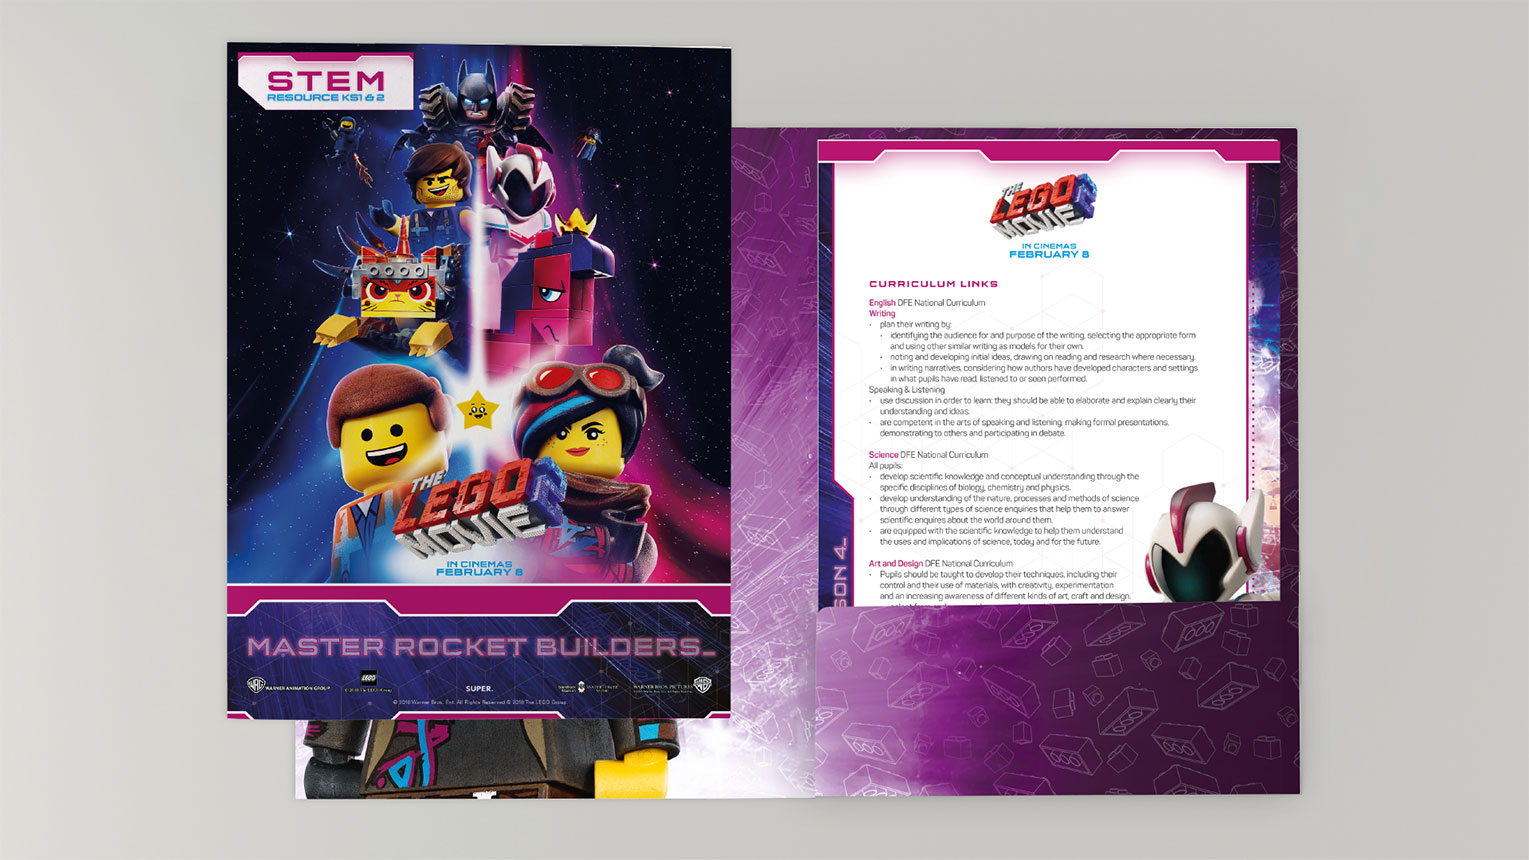 Lego Movie STEM kids marketing campaign with SUPER